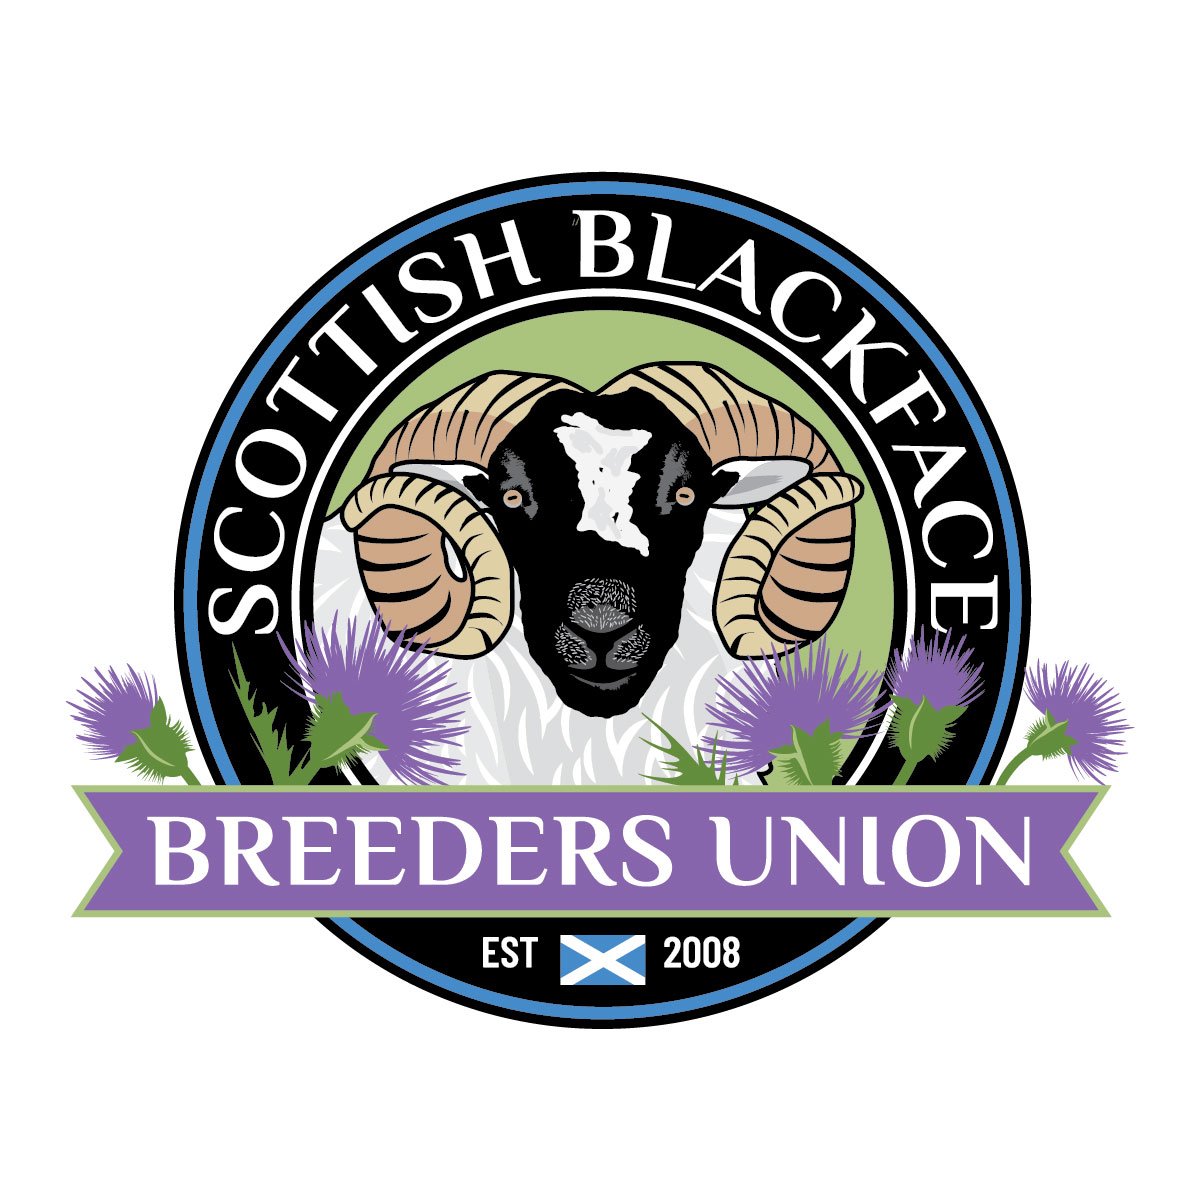 Scottish Blackface Breeders Union